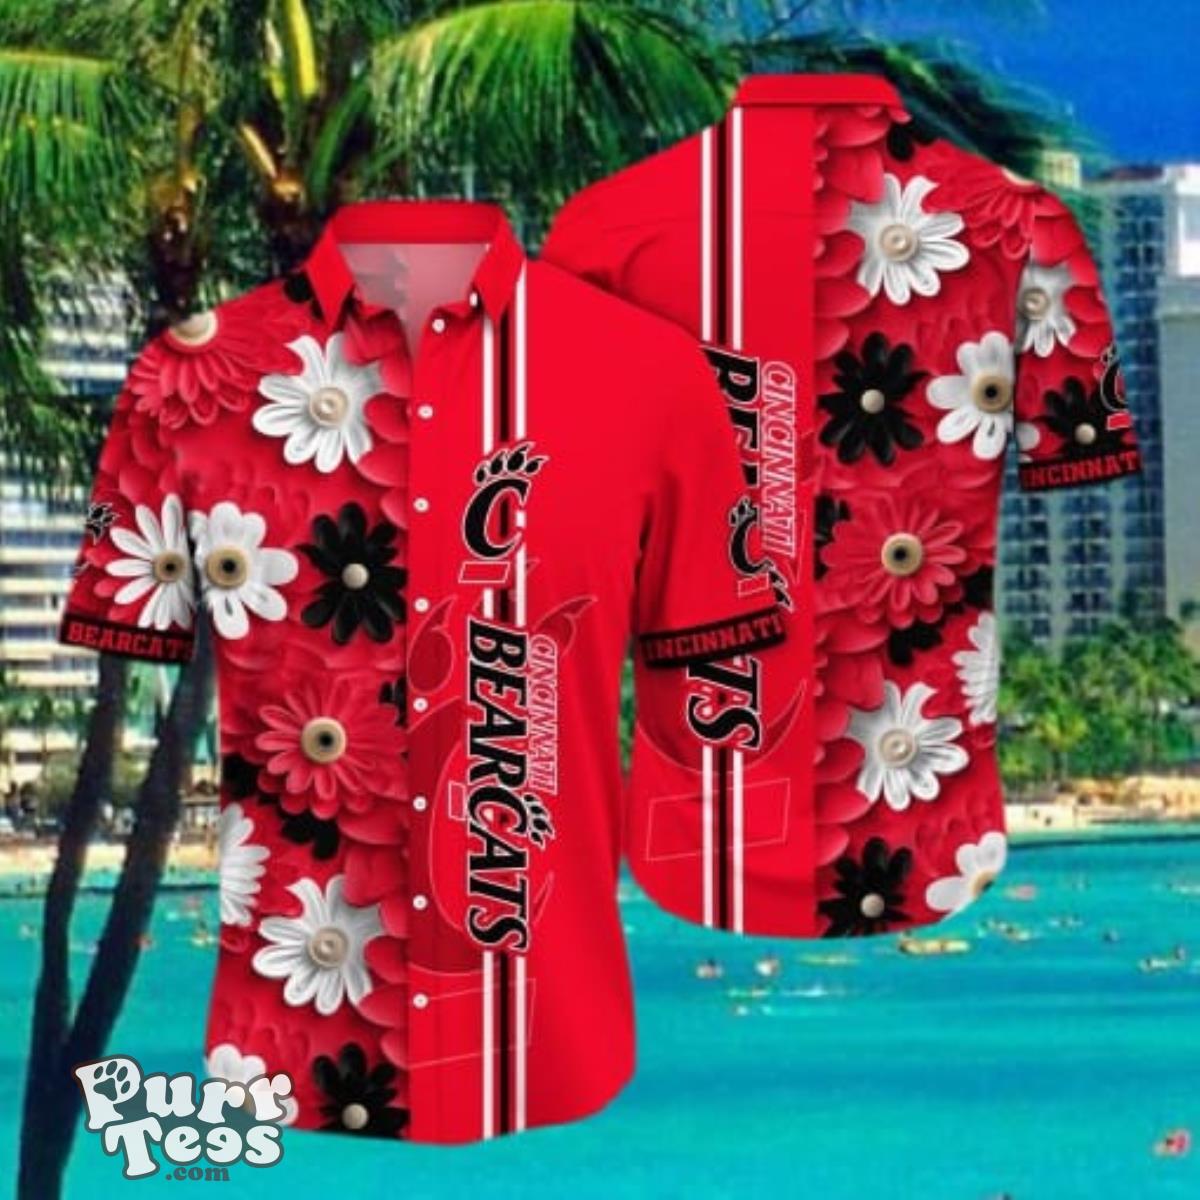 Cincinnati Bearcats NCAA Flower Hawaii Shirt And Tshirt For Fans Style Gifts Product Photo 1